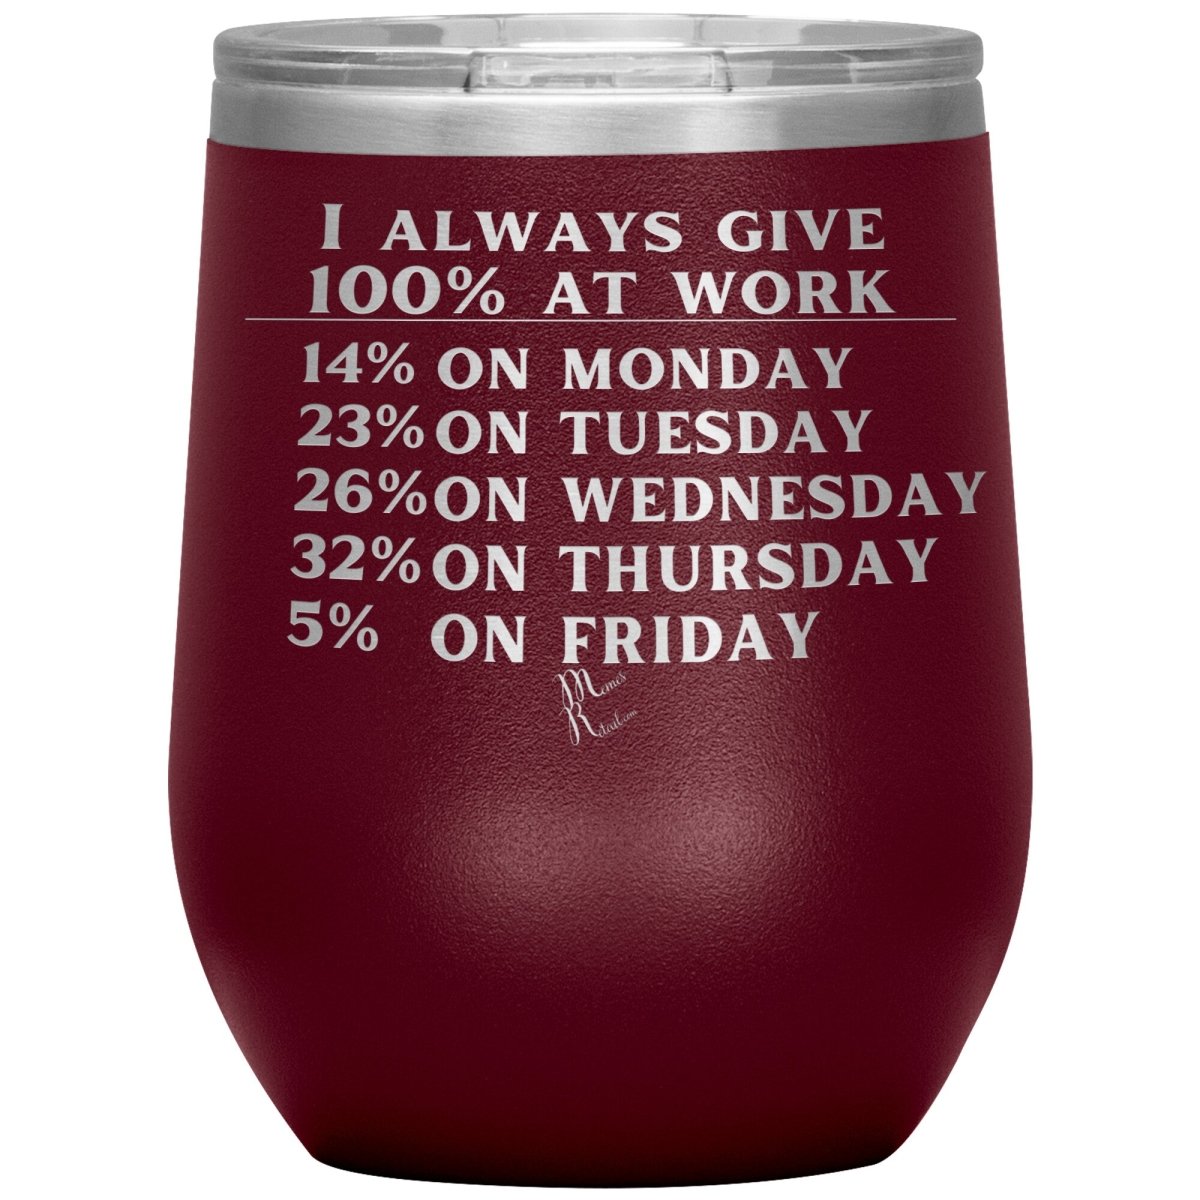 I Always Give 100% At Work Tumblers, 12oz Wine Insulated Tumbler / Maroon - MemesRetail.com